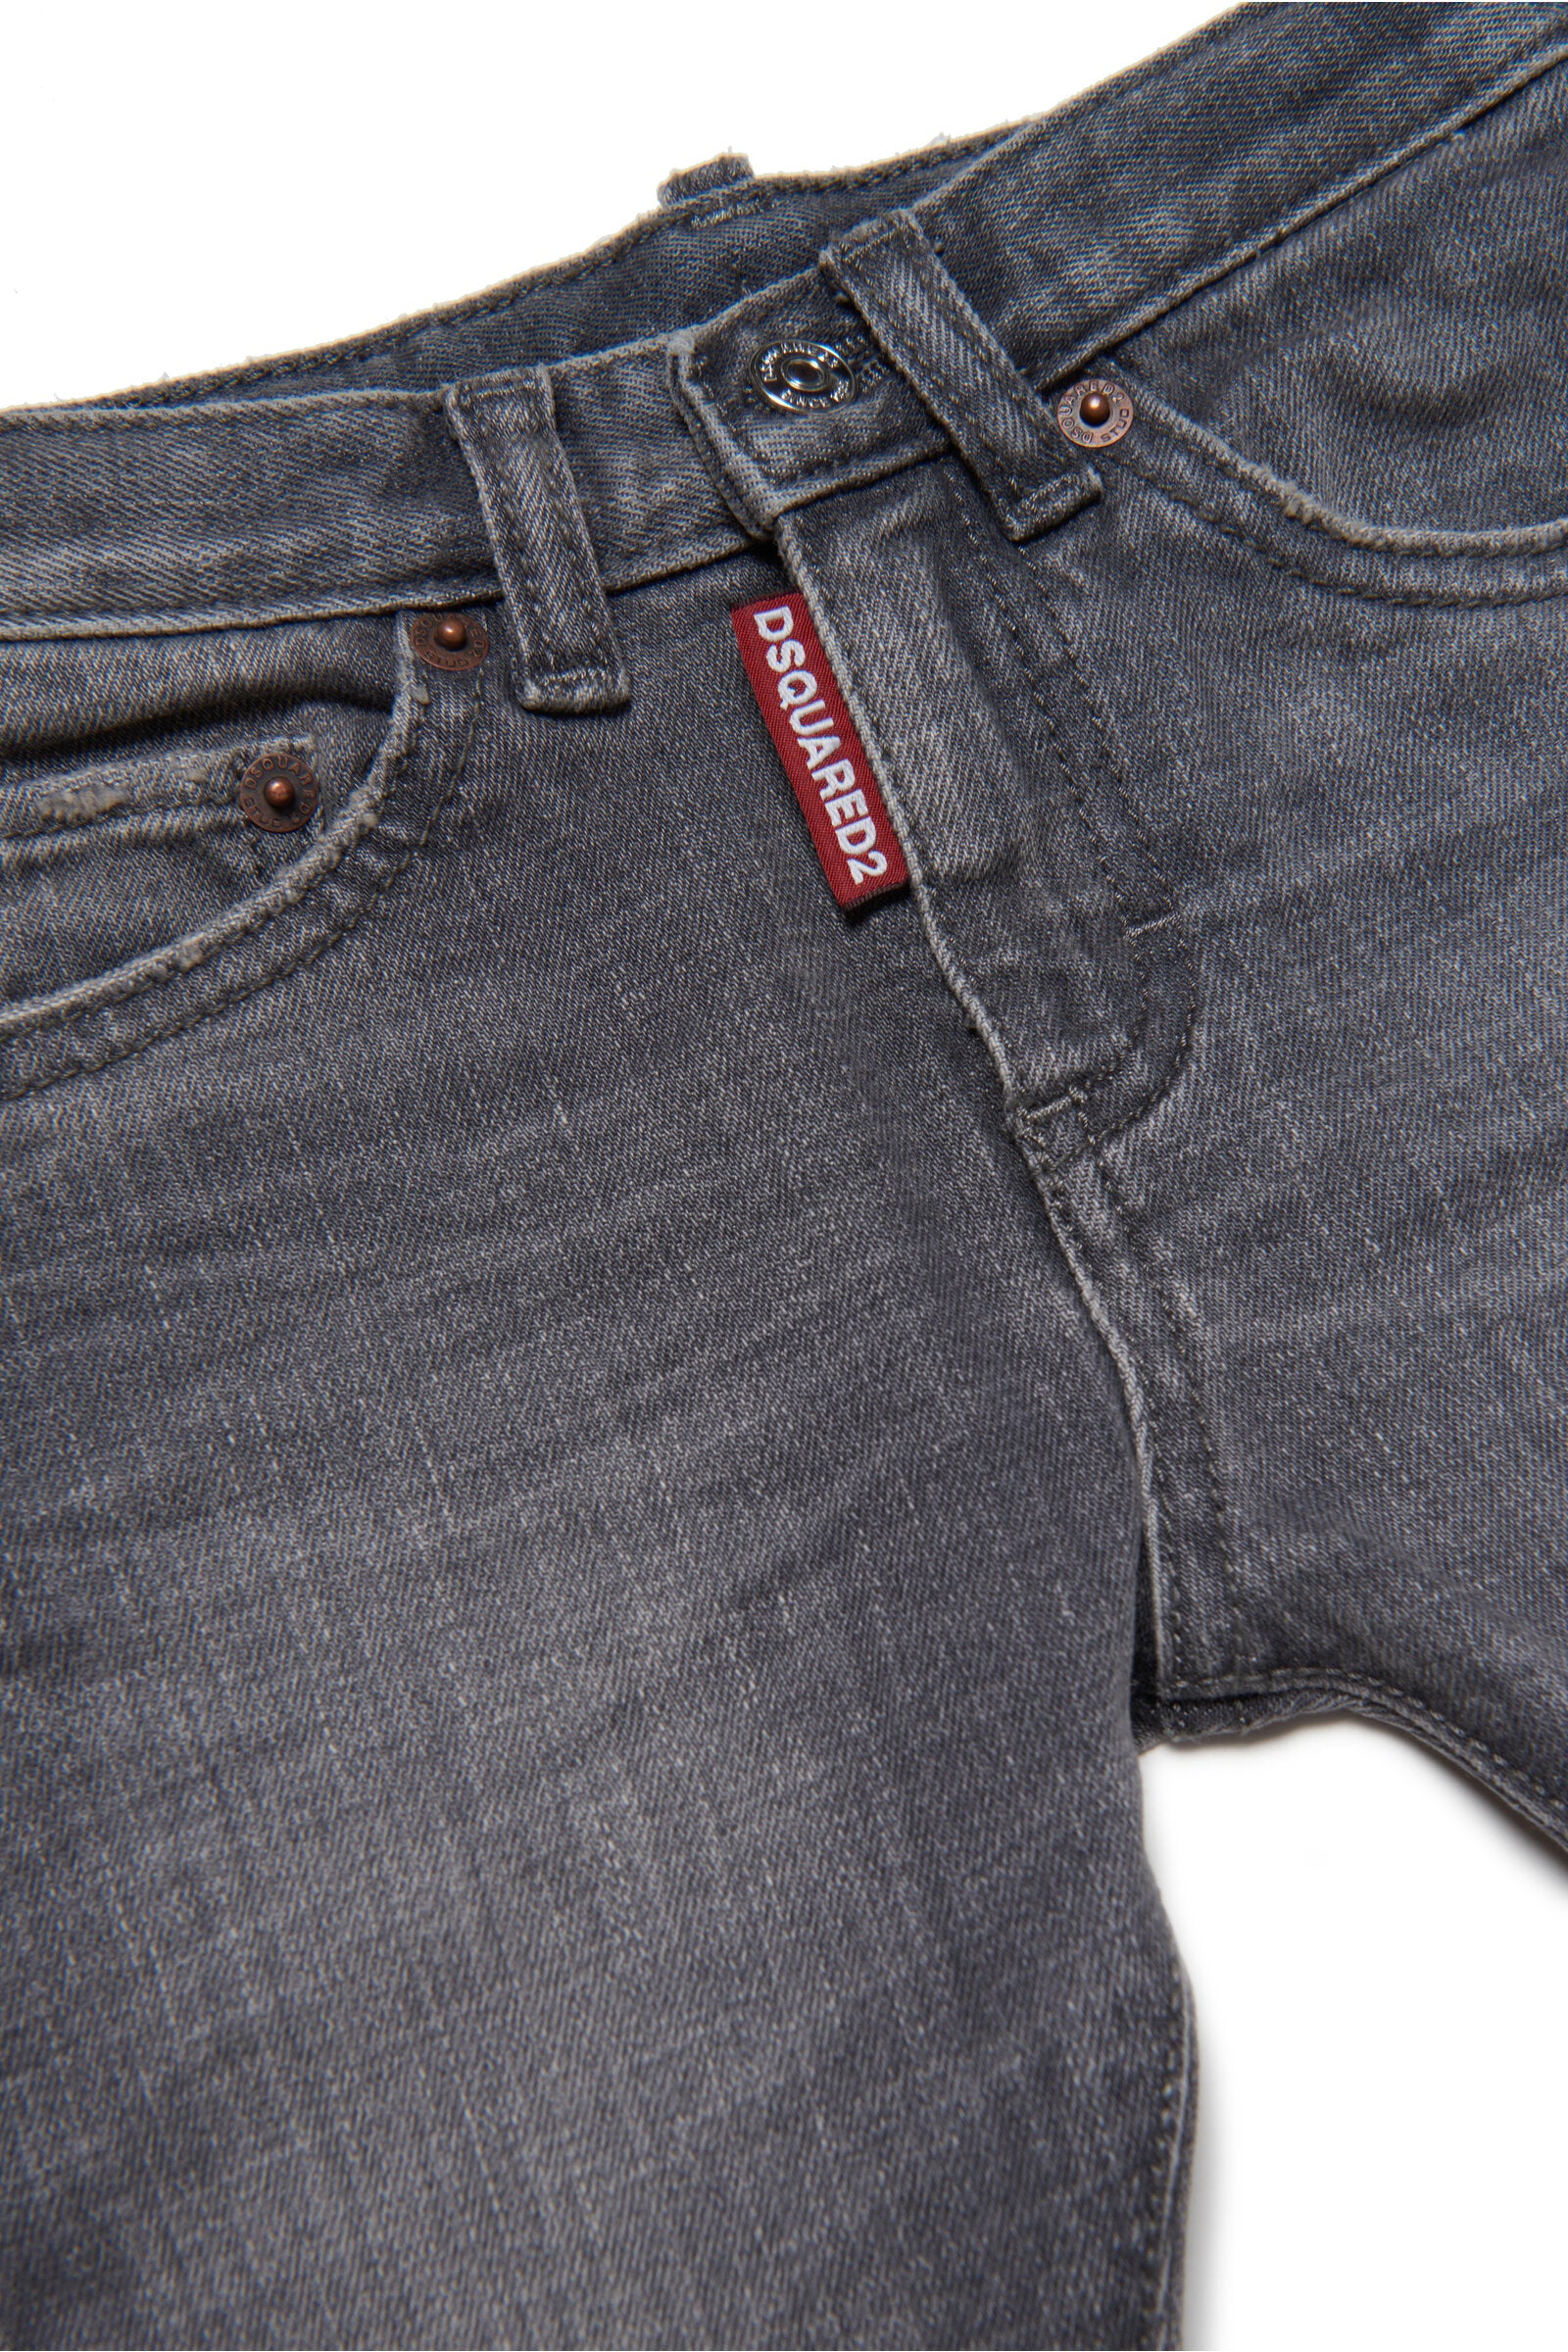 Shaded gray jeans